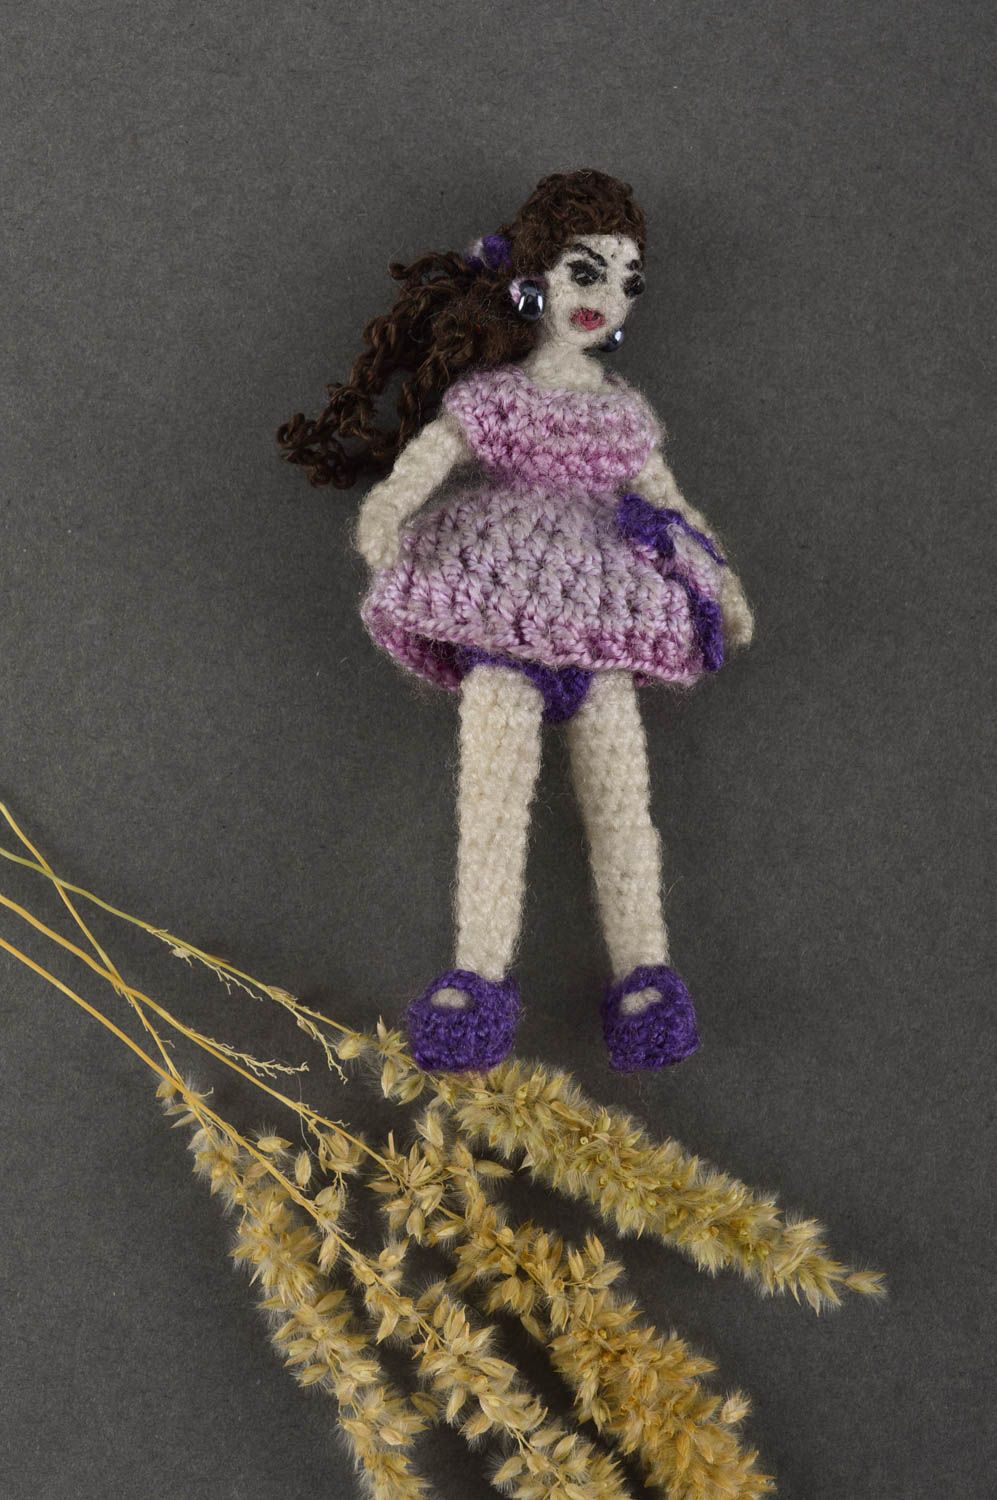 Crochet doll handmade stuffed doll decorative soft toy for children home decor photo 1